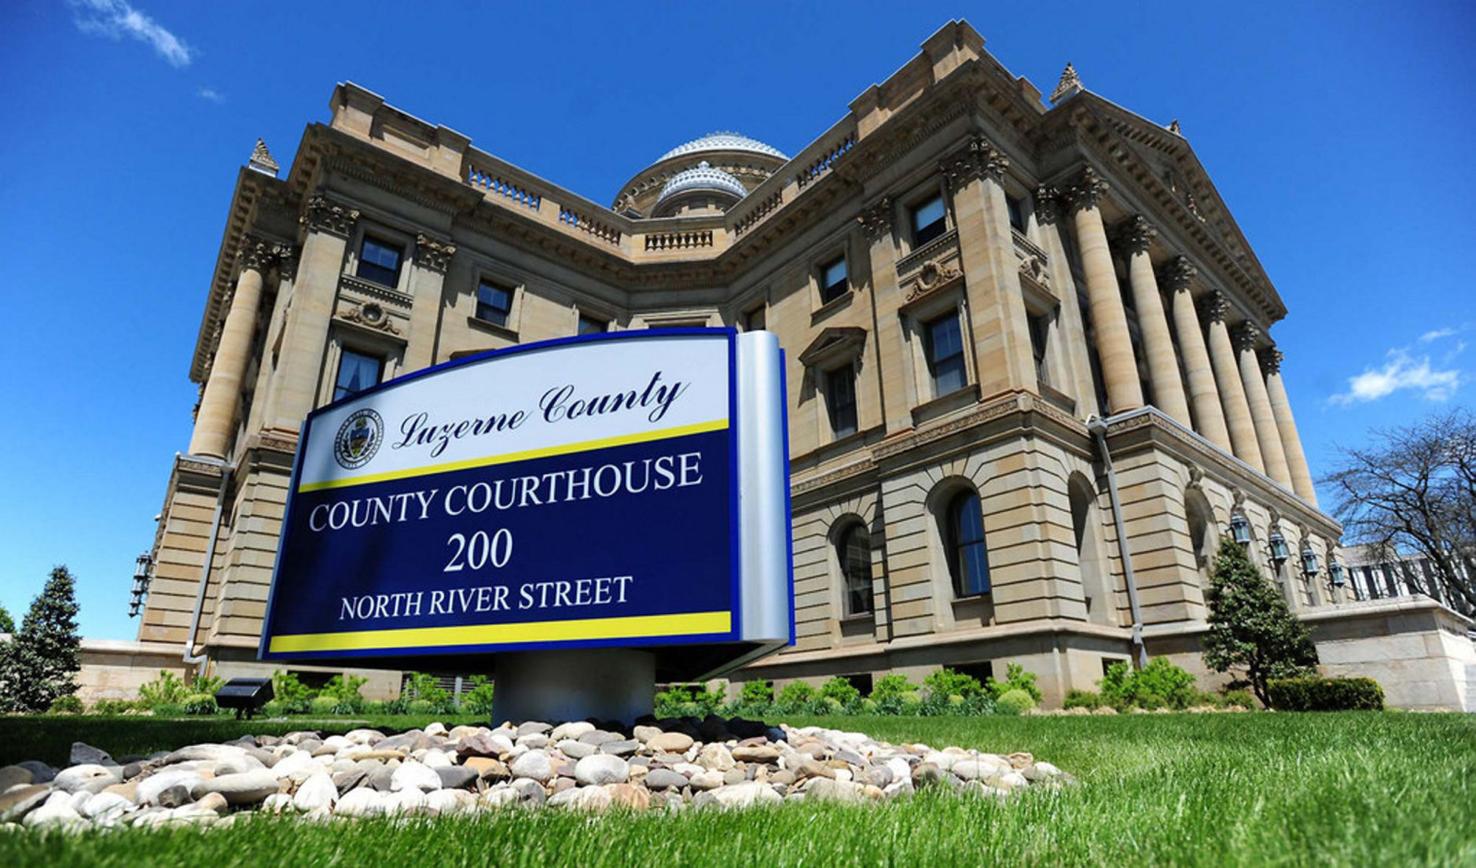 Luzerne County Courthouse closed Monday News standardspeaker com